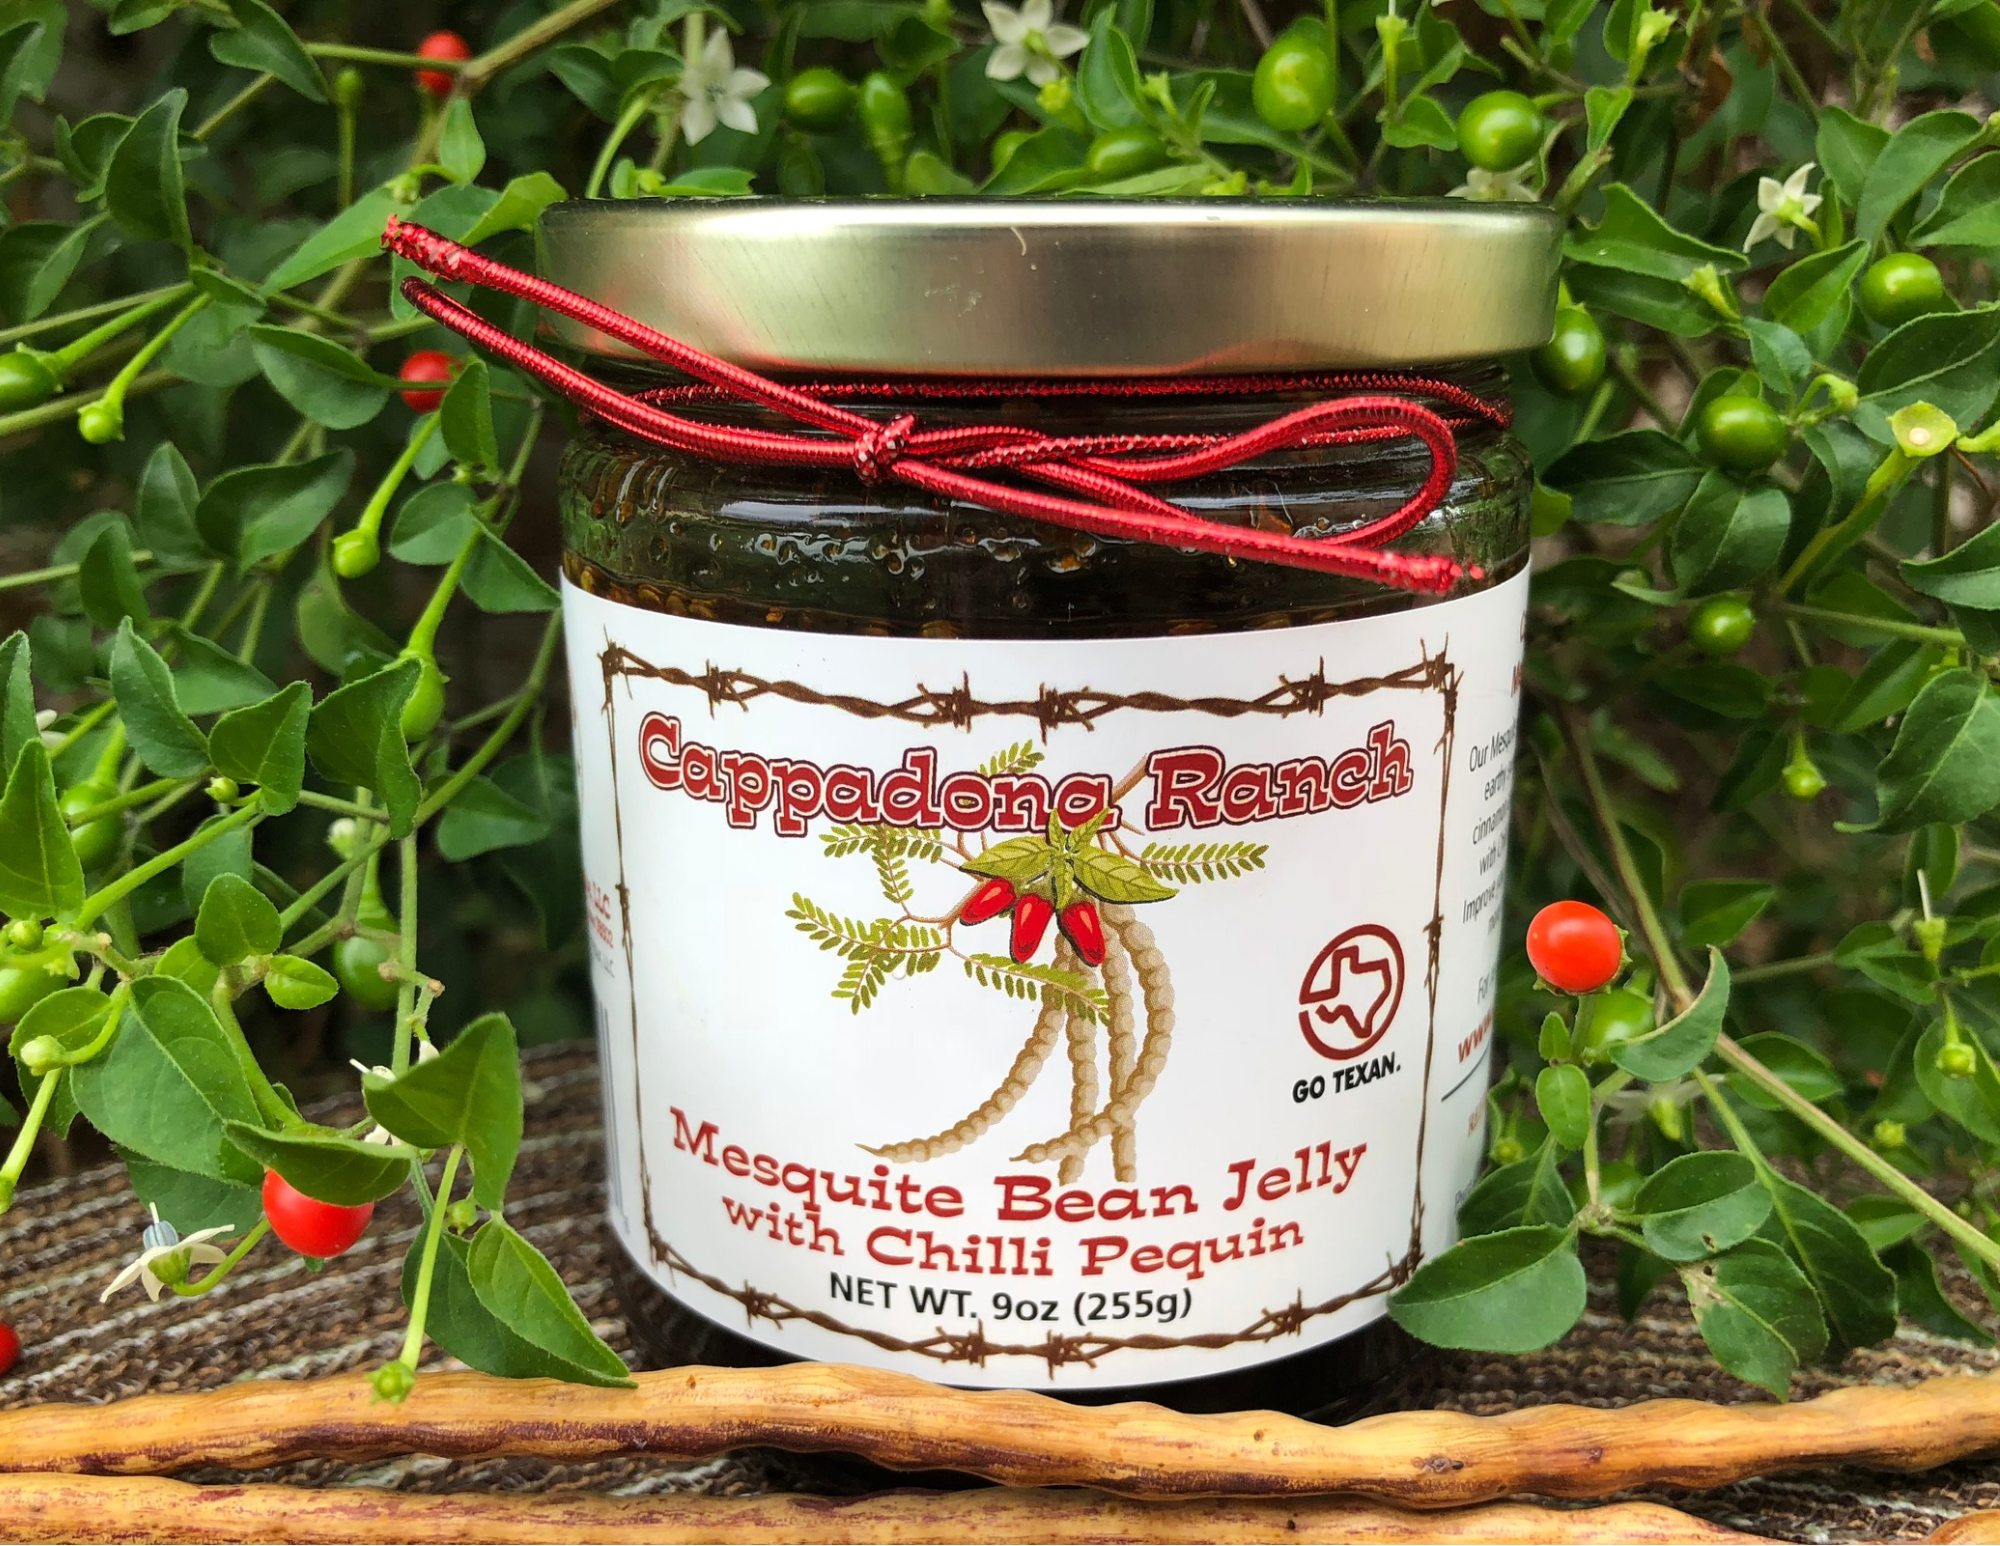 Cappadona Ranch Mesquite Bean Jelly w/Chilli Pequin